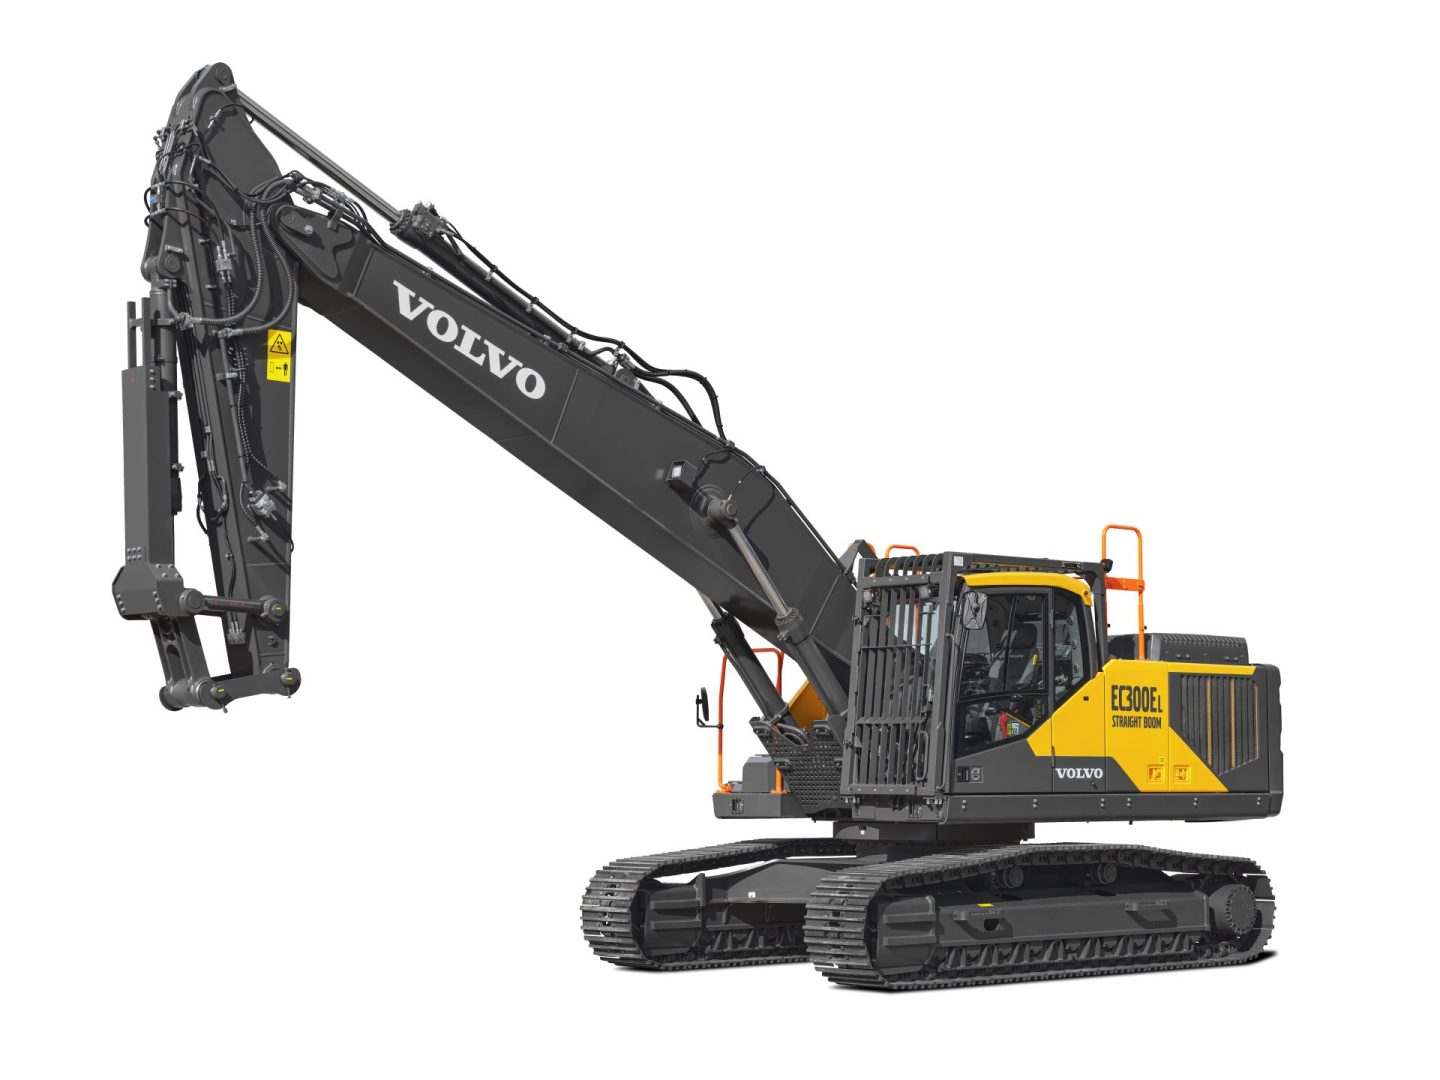 Volvo CE's latest demolition excavator